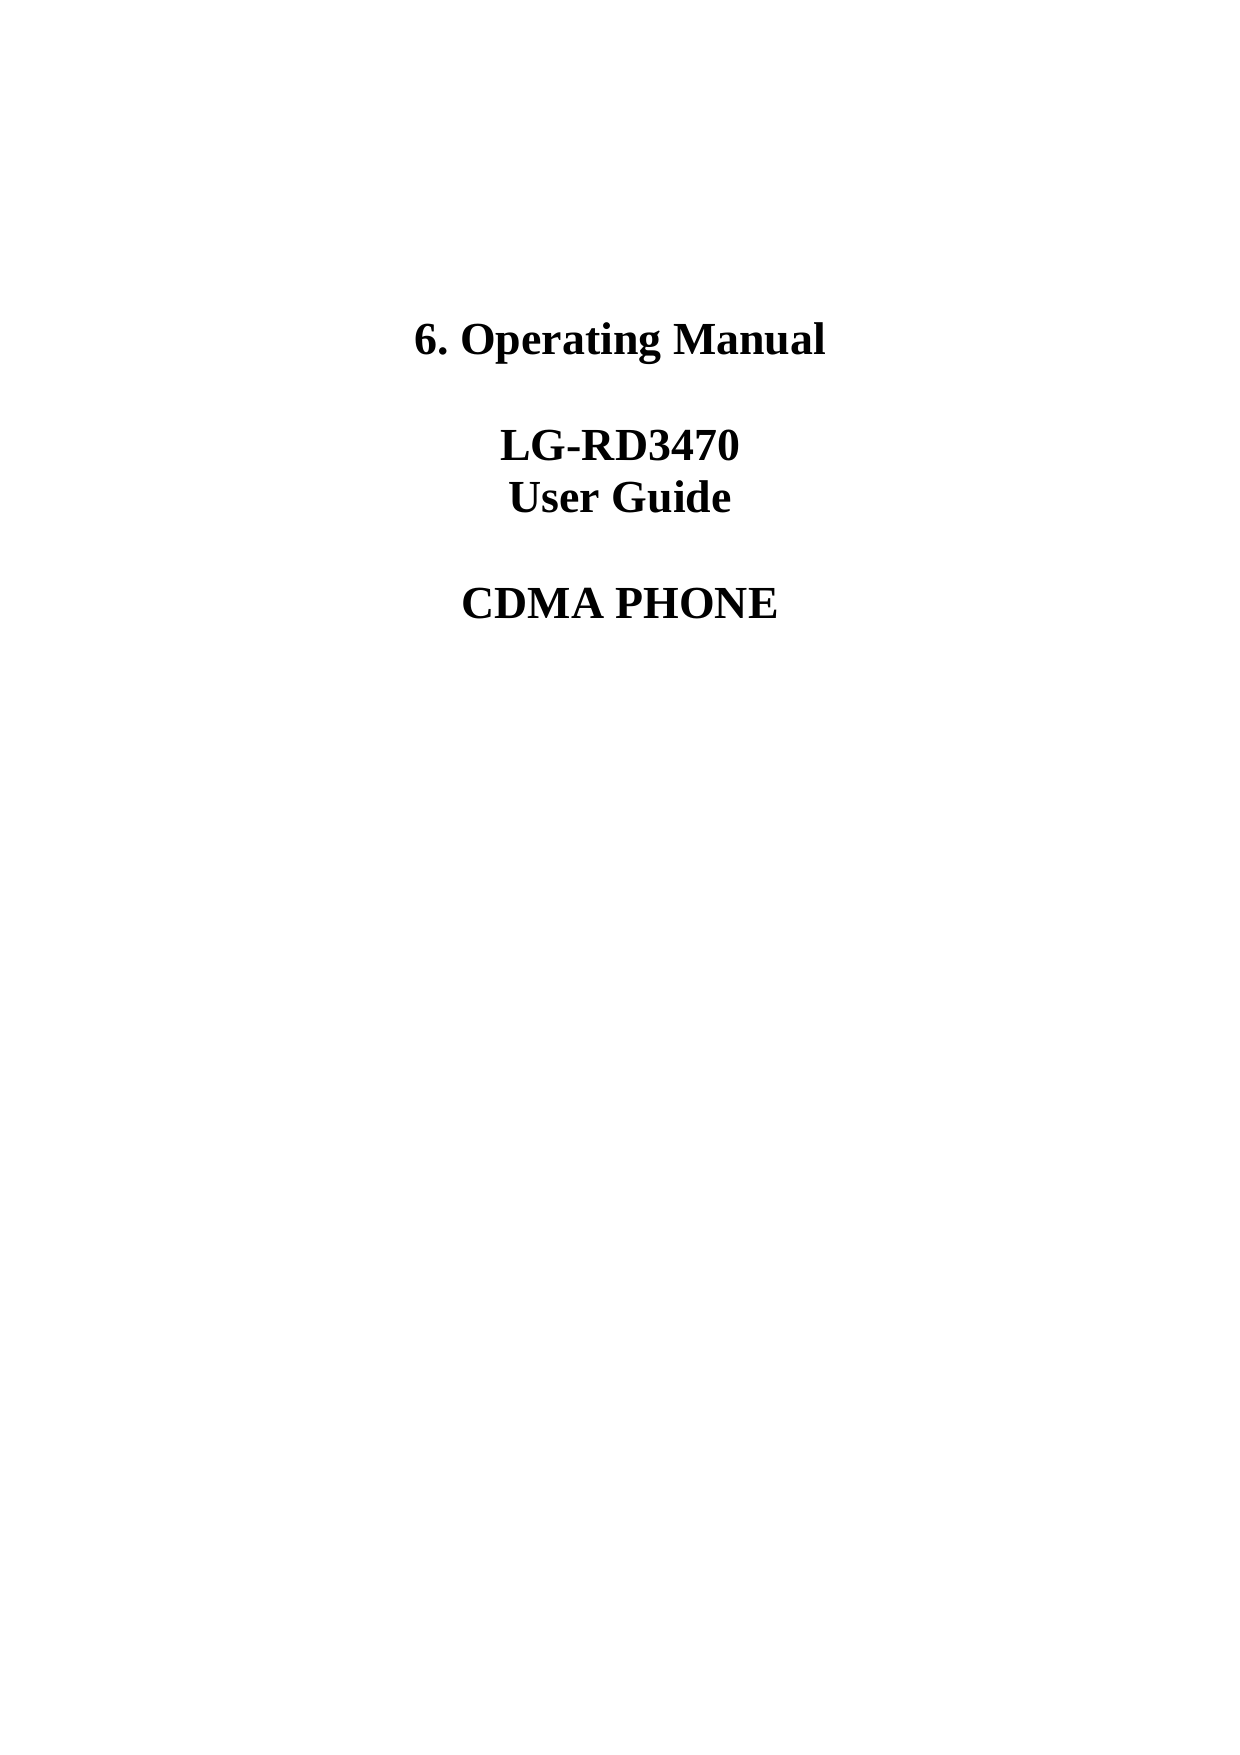   6. Operating Manual  LG-RD3470 User Guide  CDMA PHONE                          